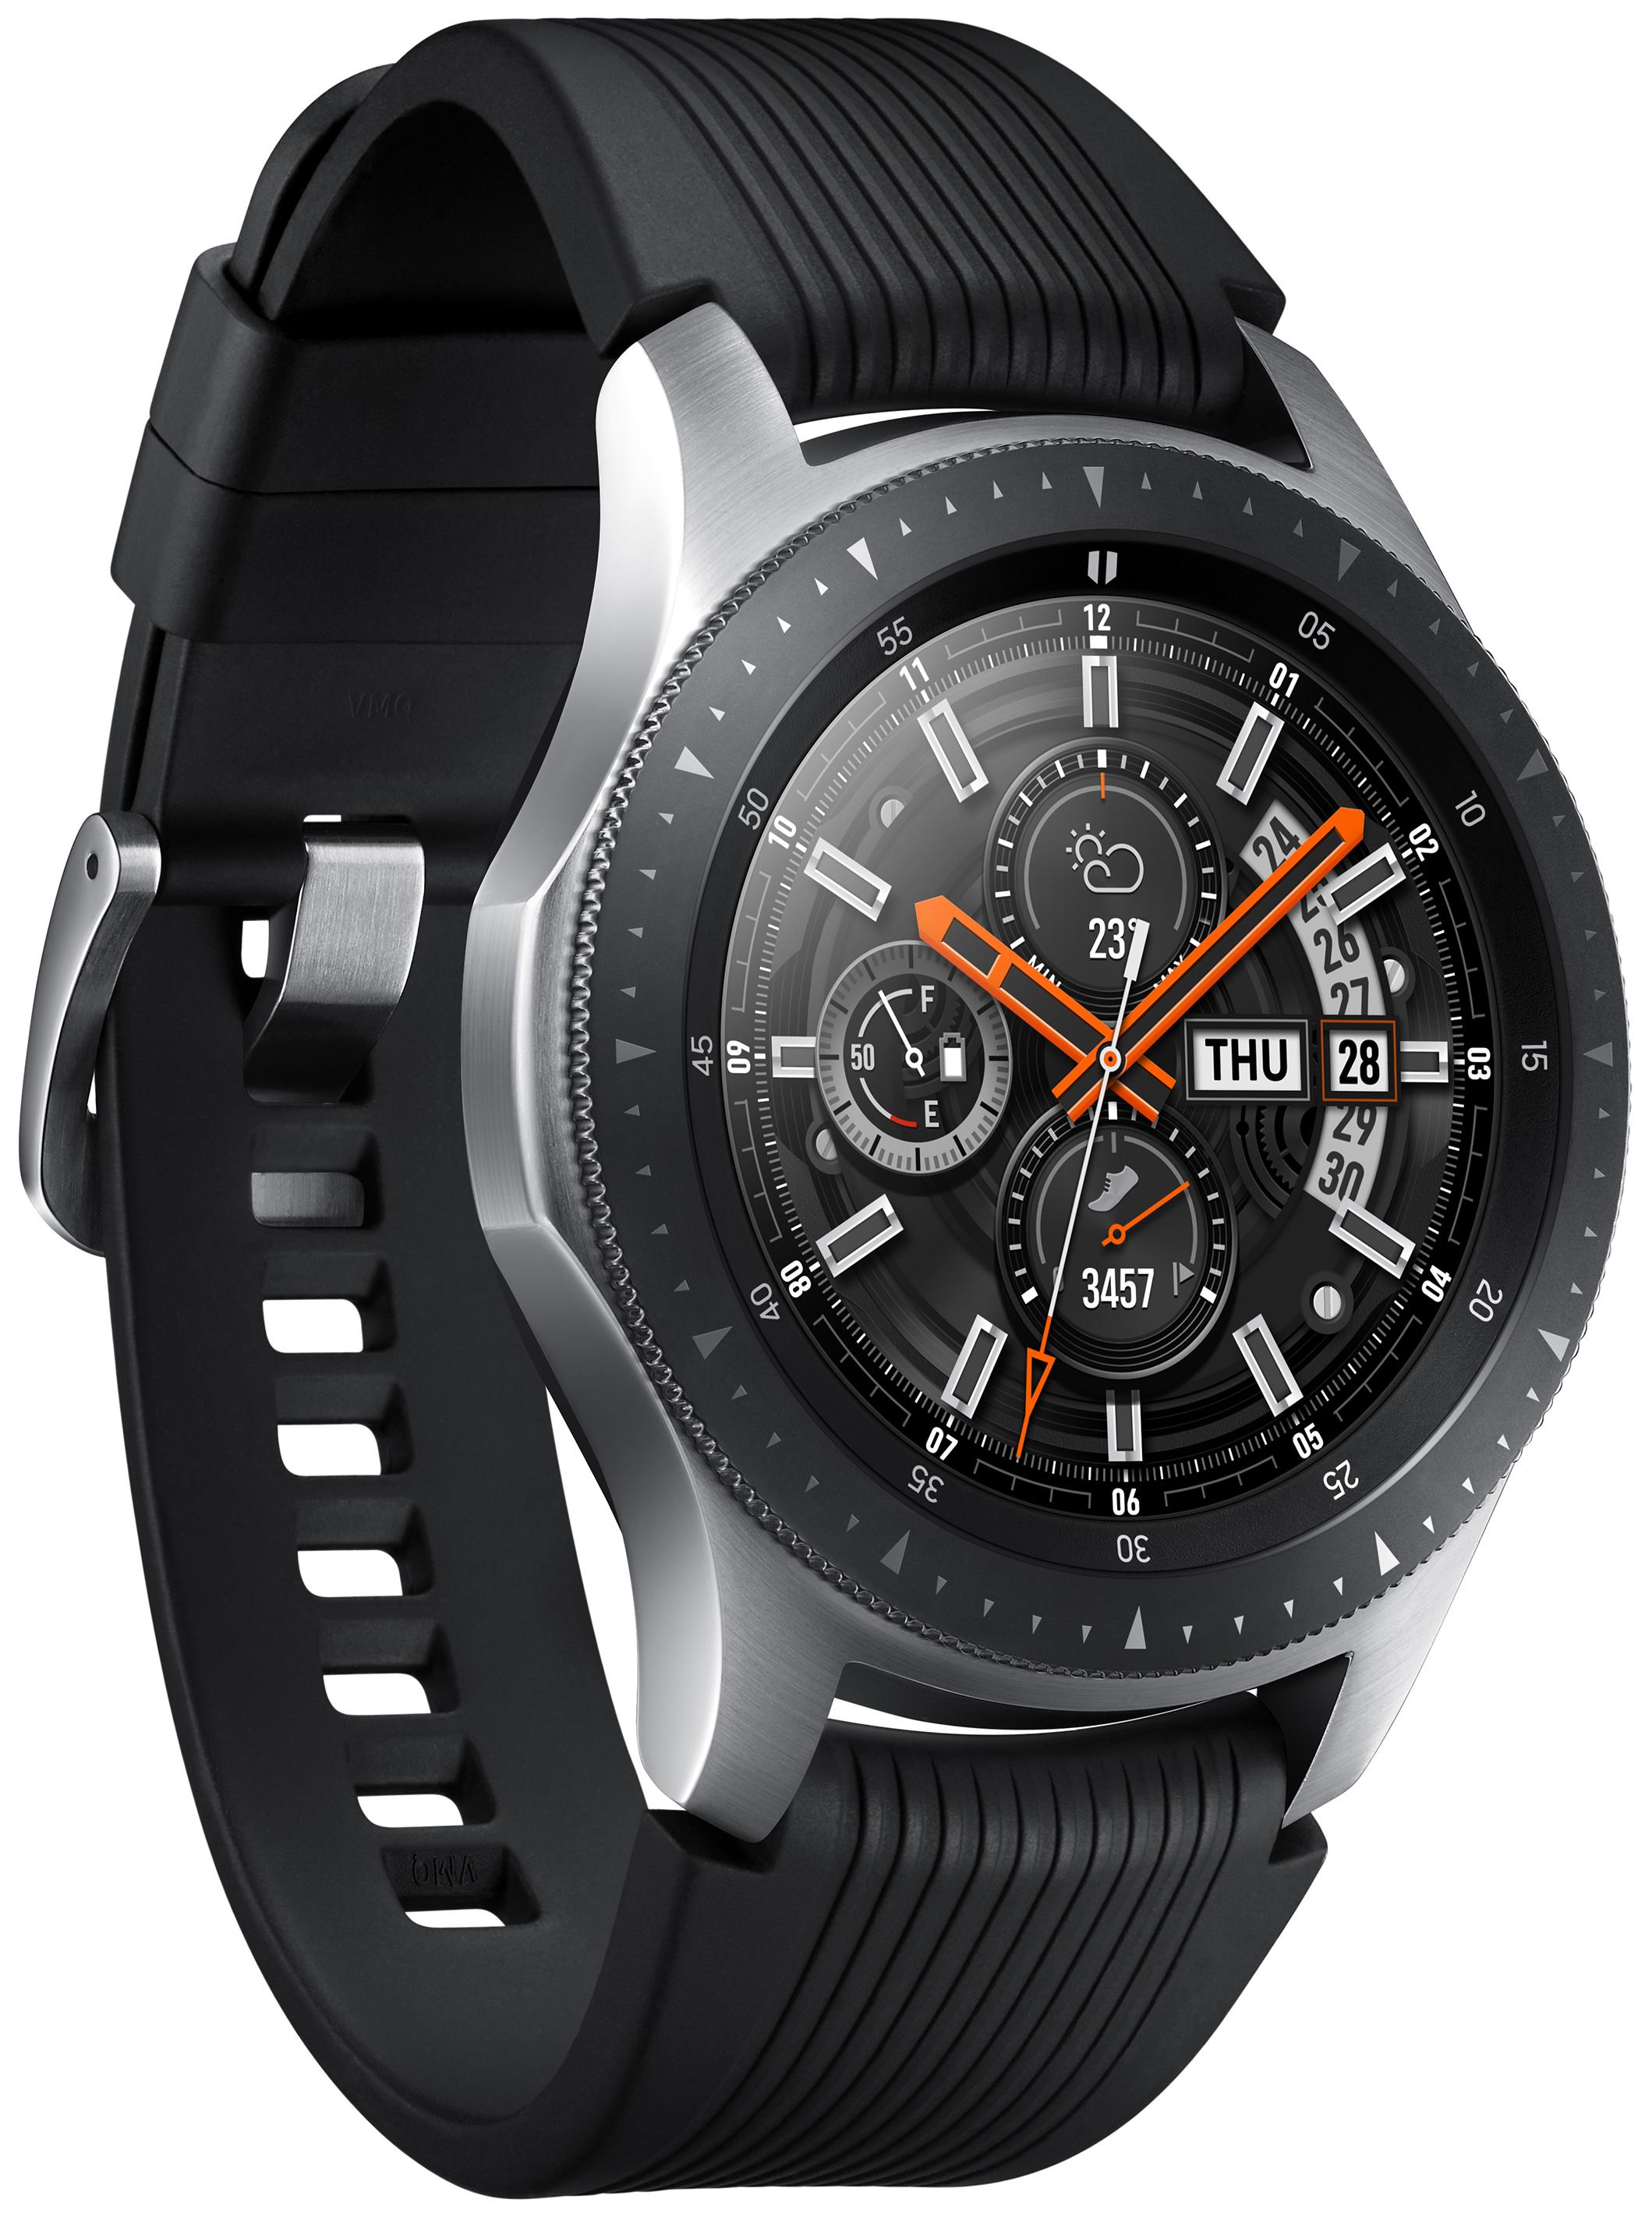 Часы Samsung Galaxy Watch 46 мм silver (SM-R800NZSASER) 0200-1758 Galaxy Watch 46 мм silver (SM-R800NZSASER) - фото 4